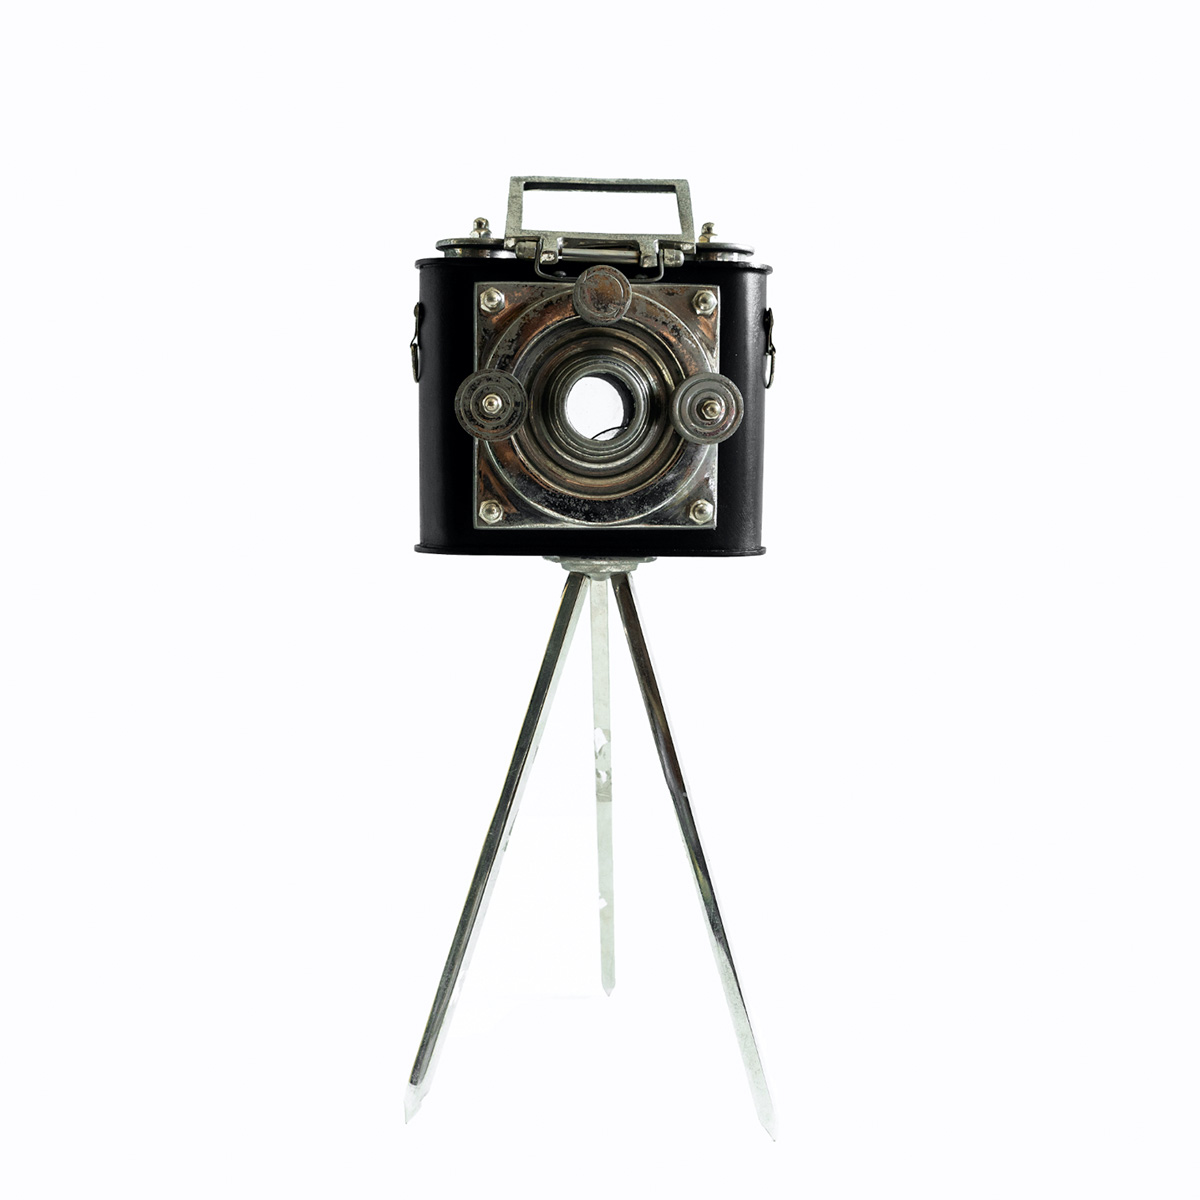  Antique Style Vintage Camera 